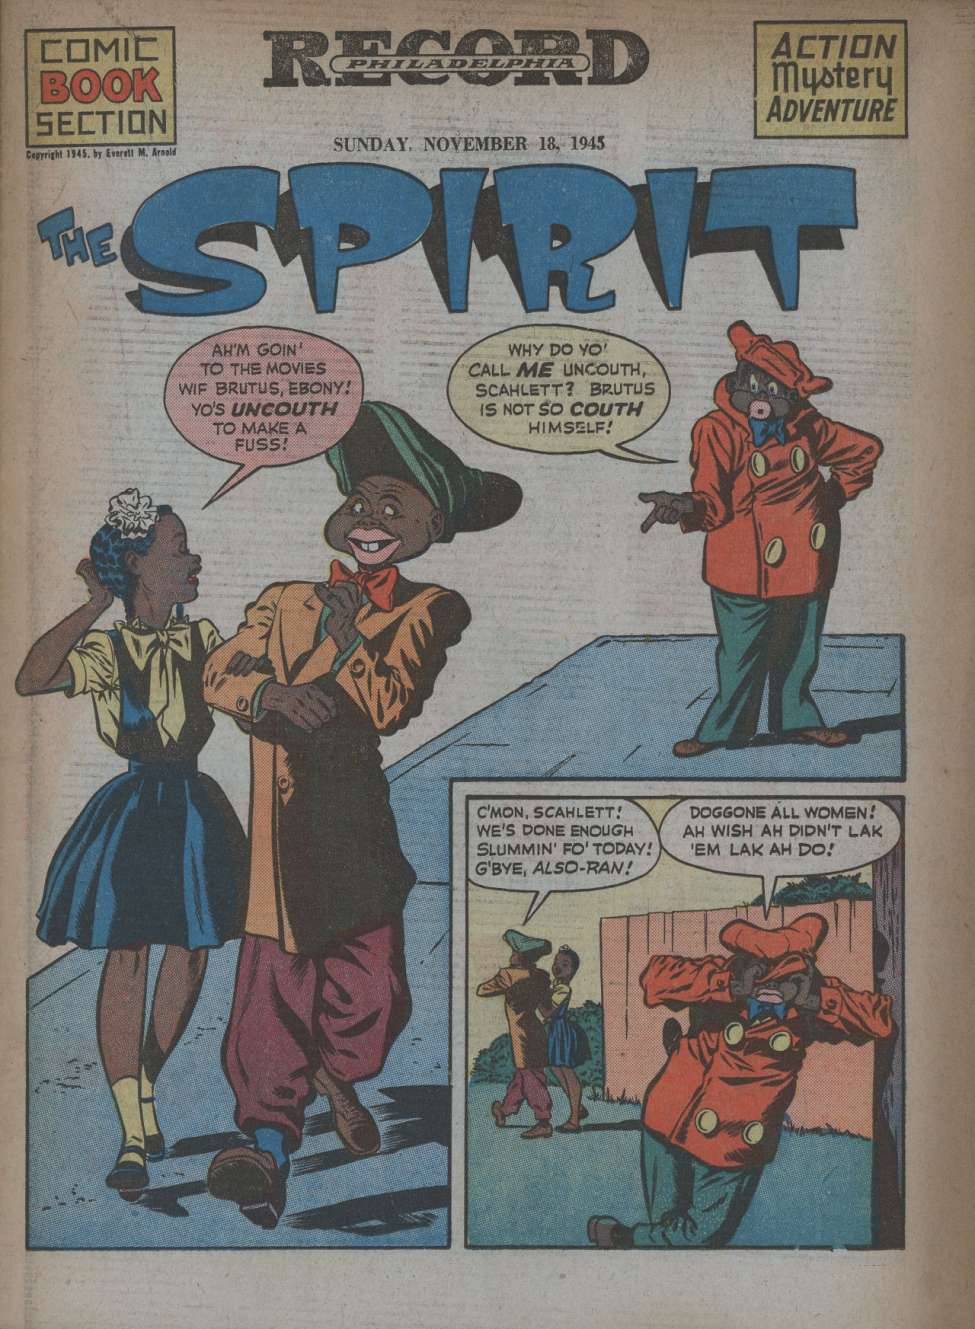 Comic Book Cover For The Spirit (1945-11-18) - Philadelphia Record - Version 2